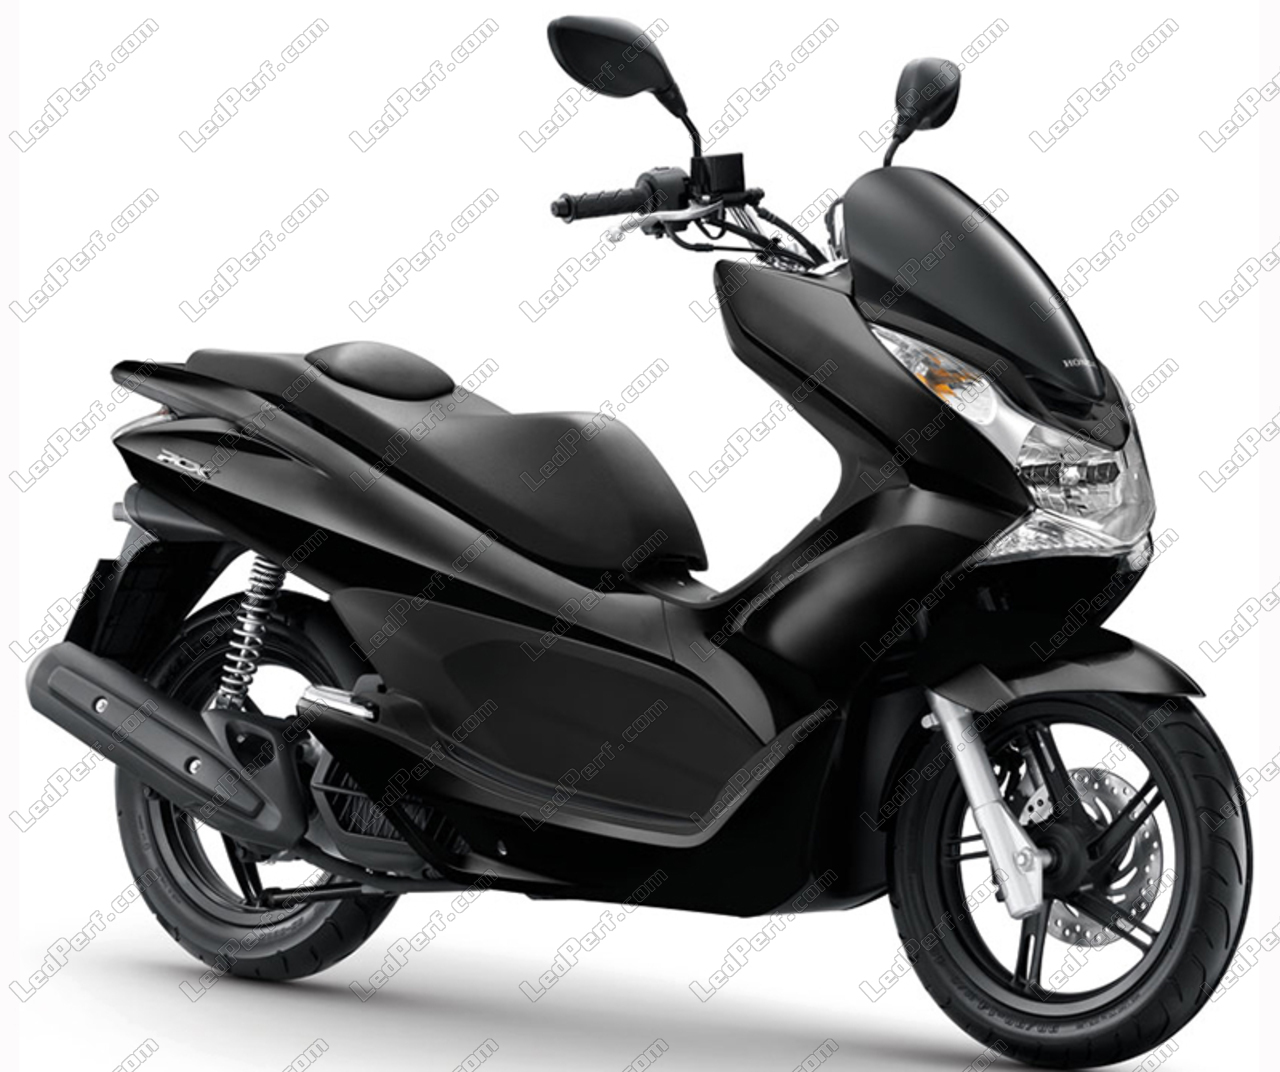 Скутер Honda PCX 150. Honda 150 cc Scooter. Honda PCX 125 2021. Honda PCX 125 Black. Скутеры honda 150